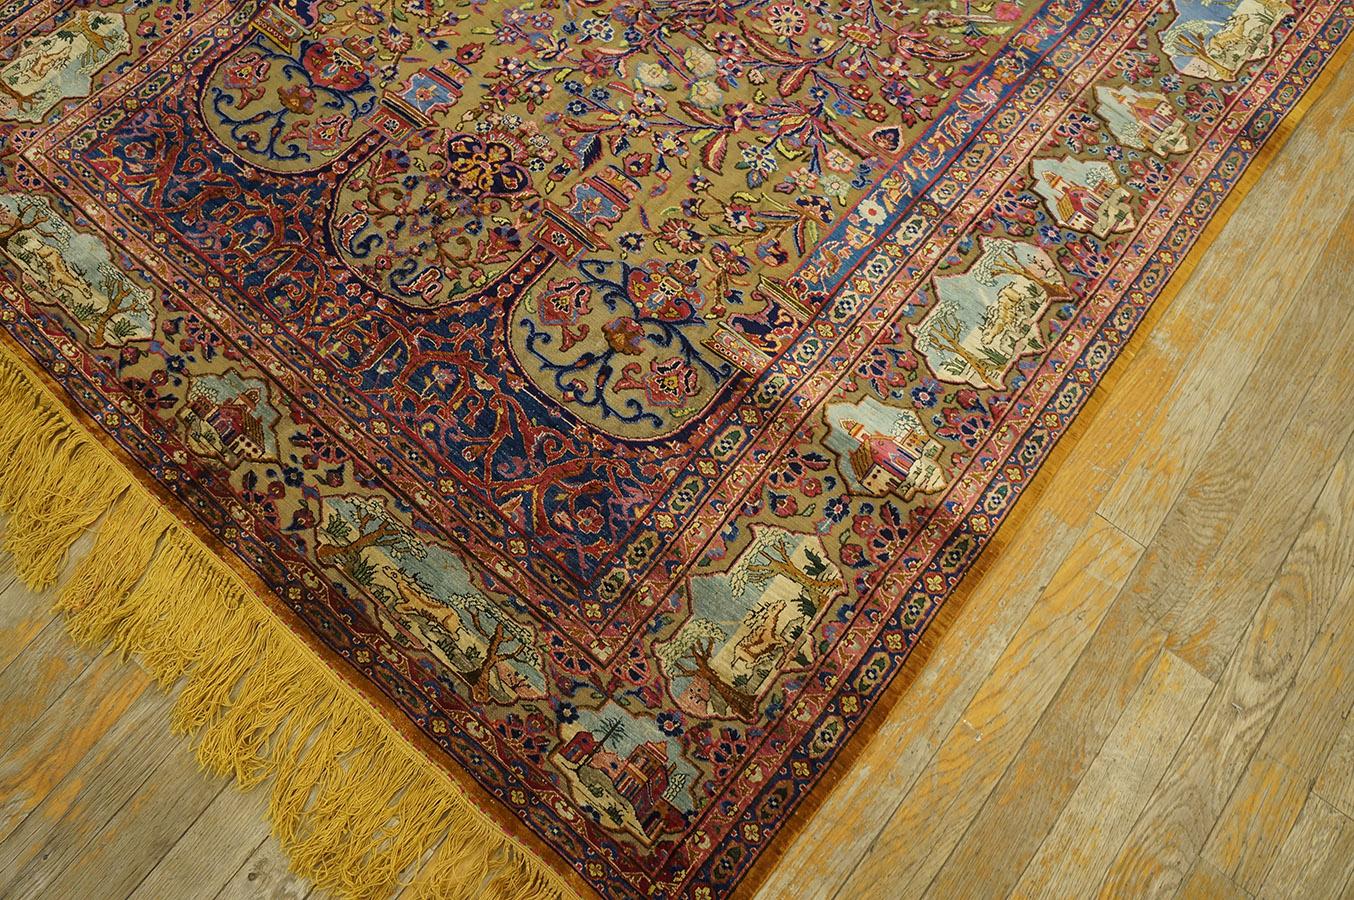 Early 20th Century Silk & Metallic Threads Souf Kashan Carpet (4' 3'' x 6' 3'') For Sale 7